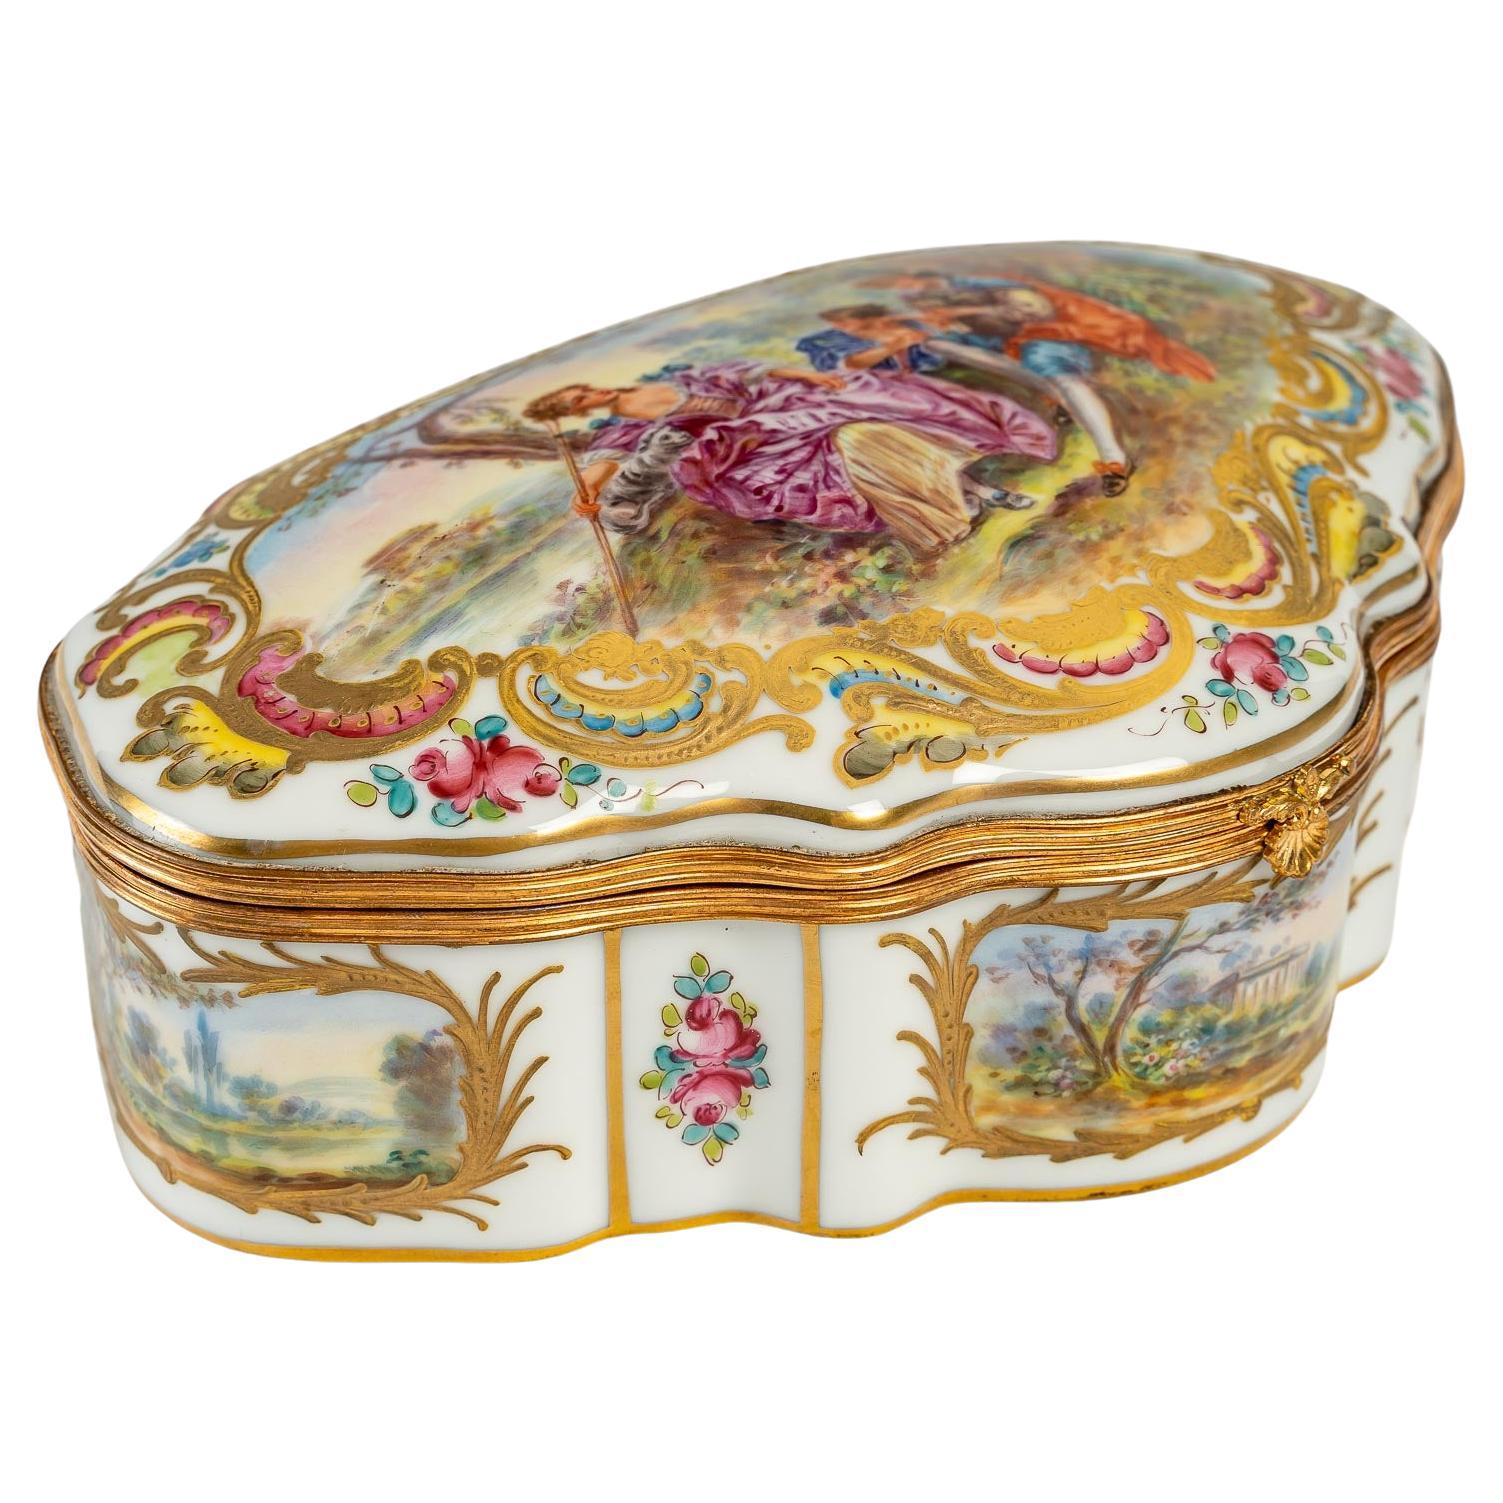 Porcelain Box with Elegant Scene, 19th Century